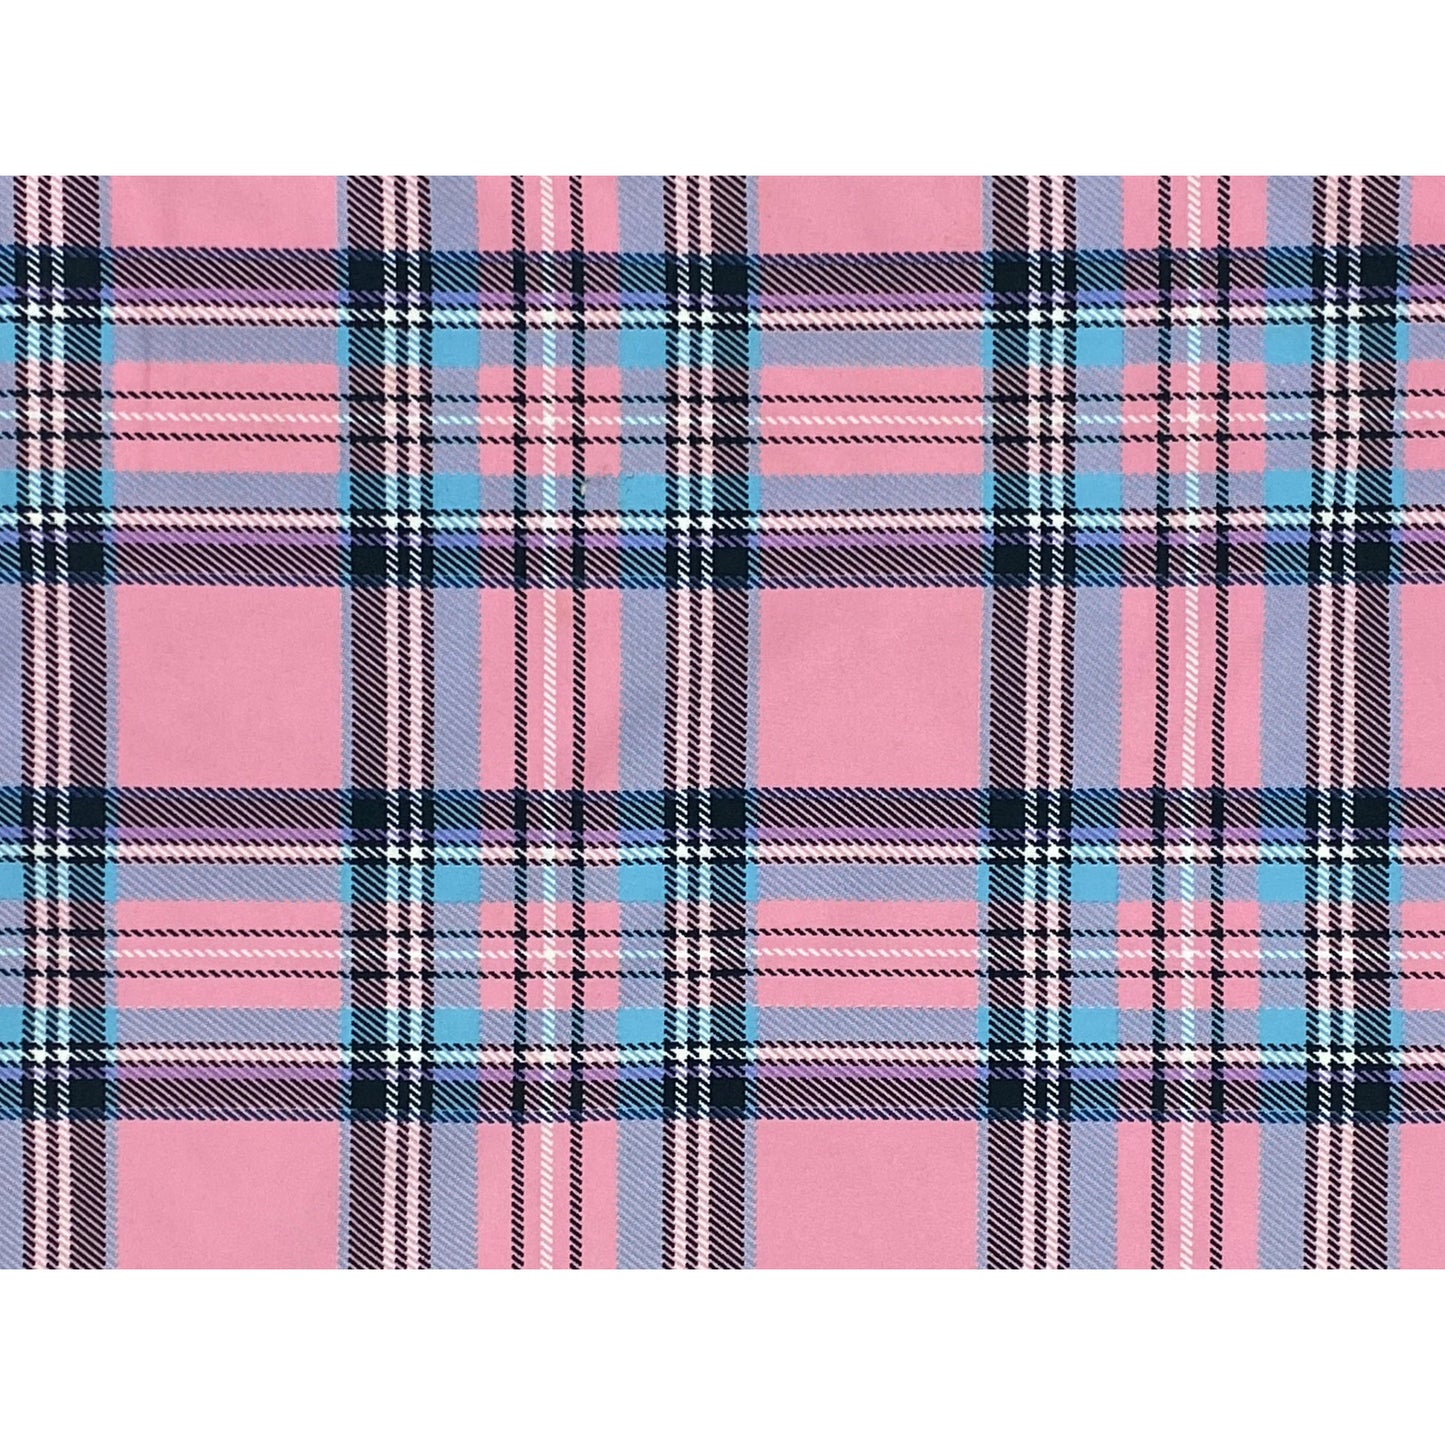 **Fixed (Non Elastic) Waist Board Shorts "Outer Banks" Plaid (Pink) Print Mens CUSTOM